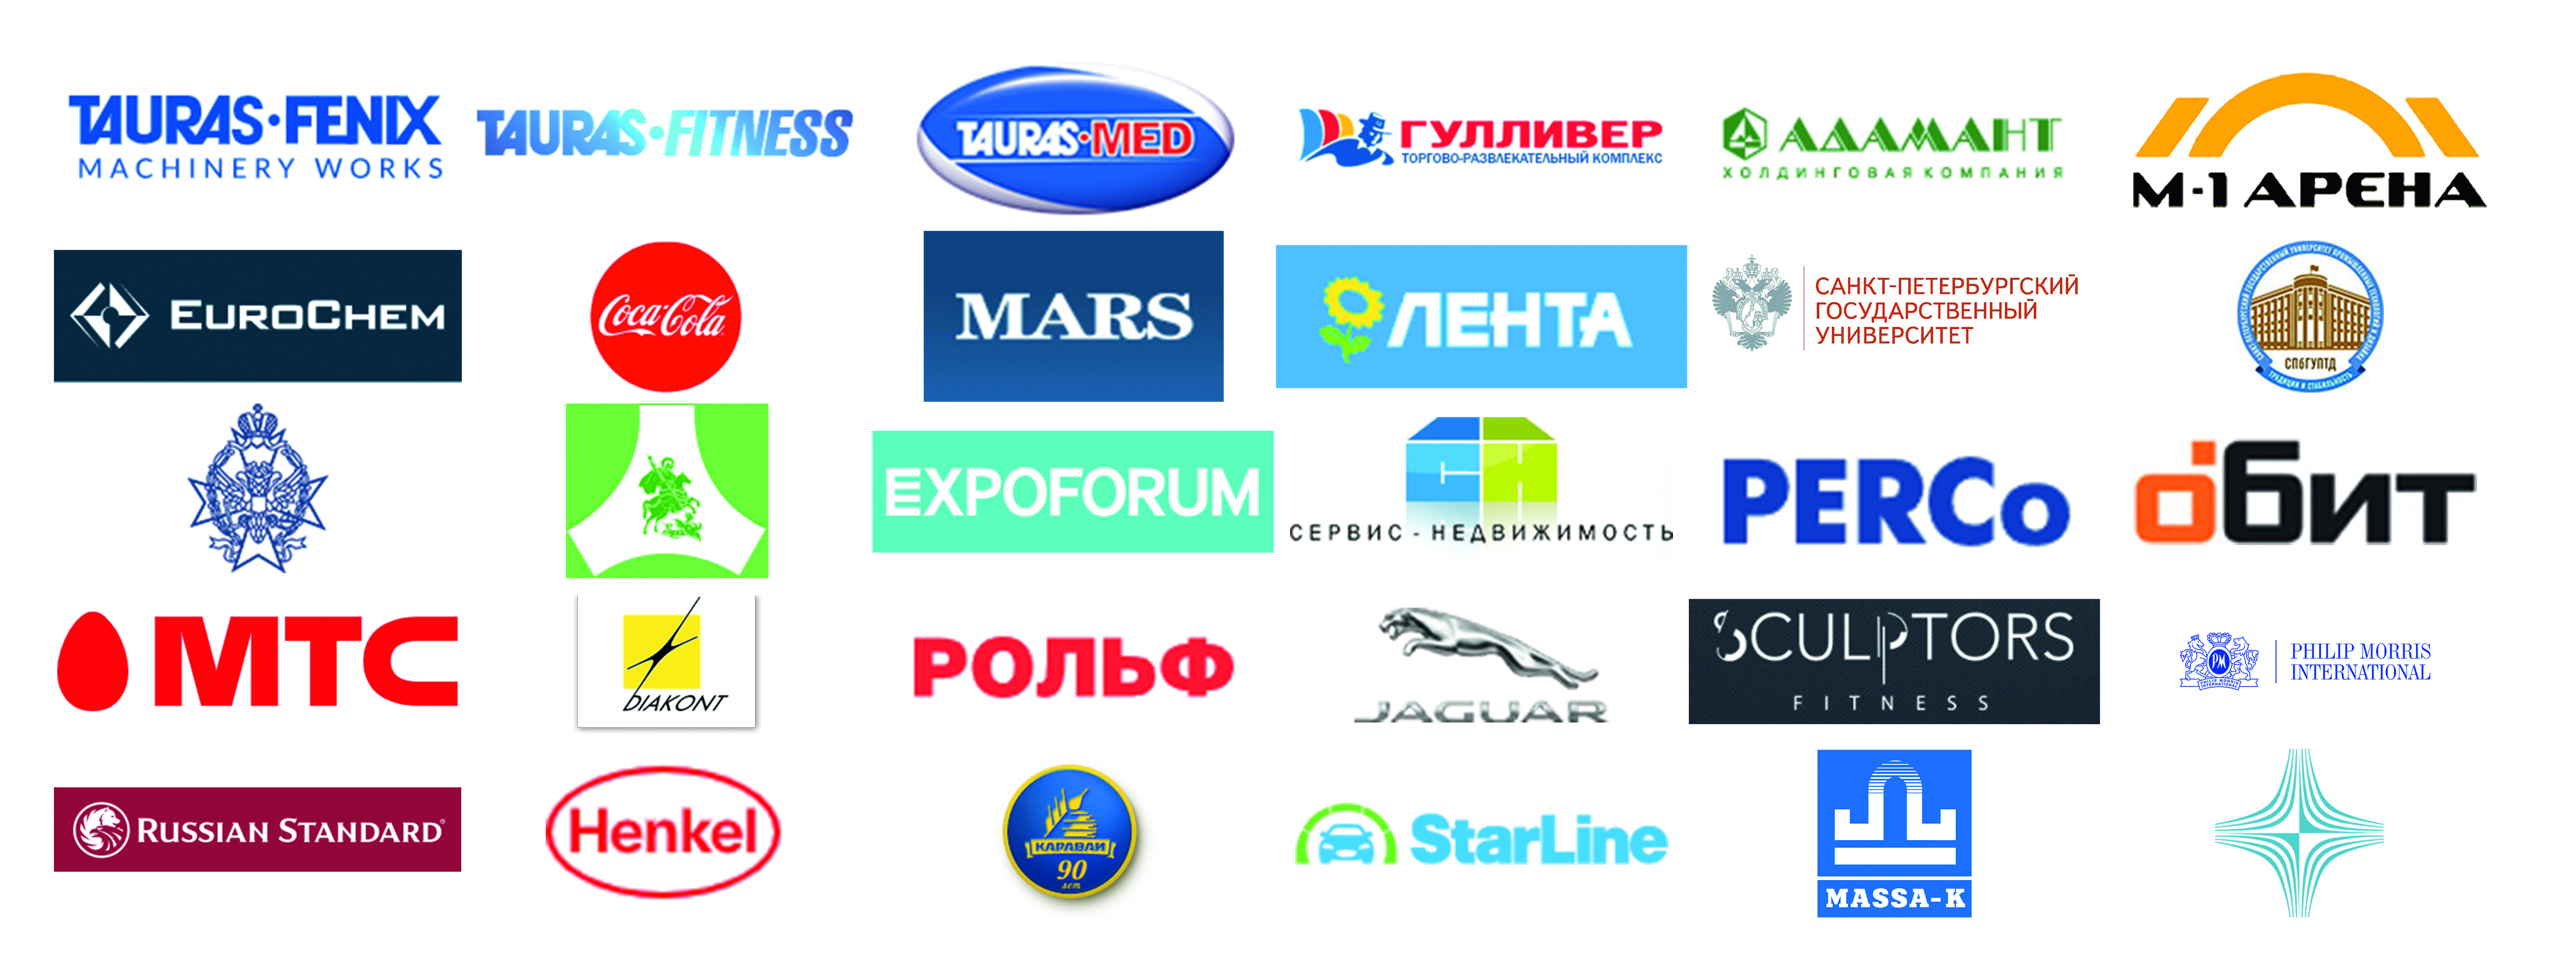 //sl-led.ru/wp-content/uploads/logos.jpg